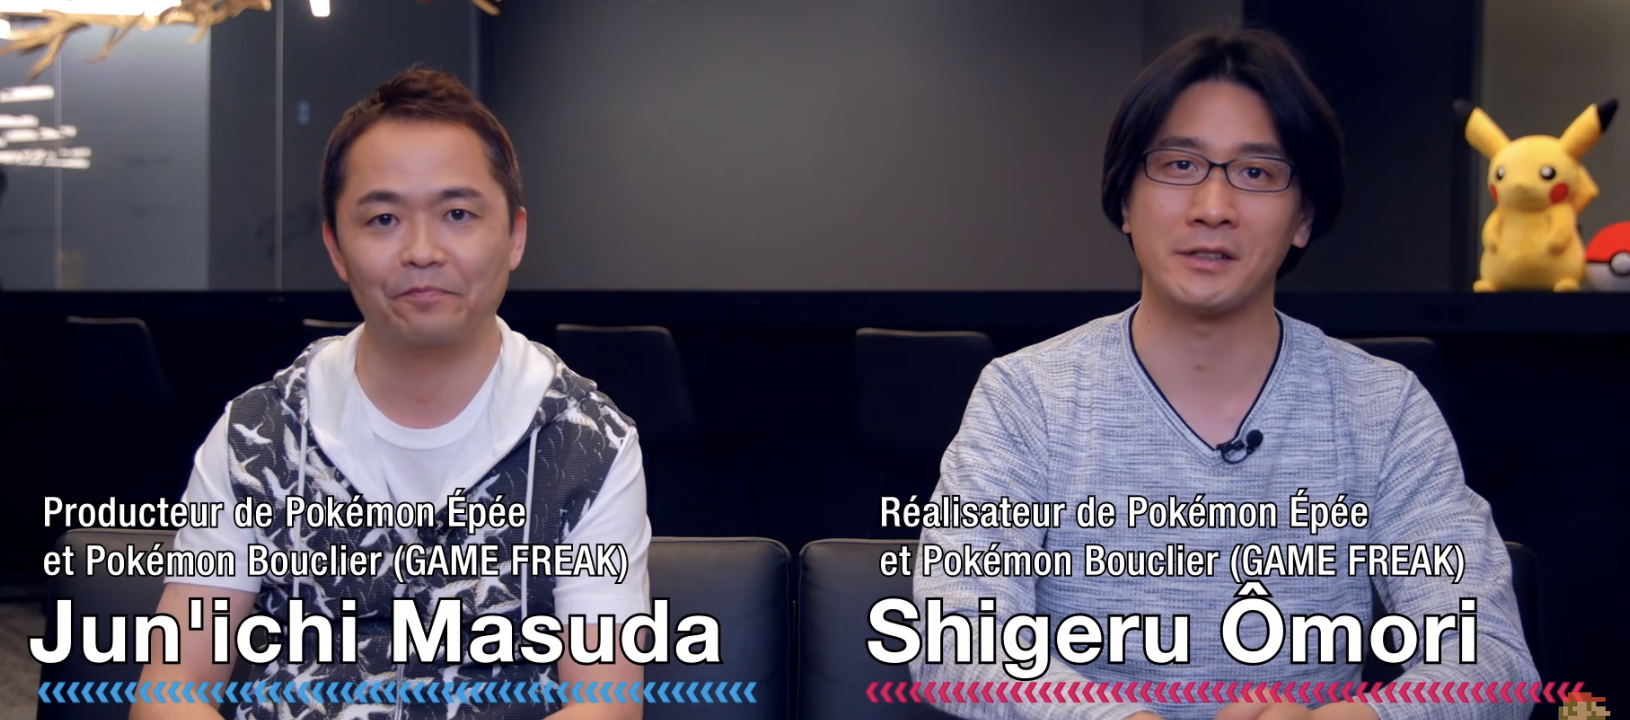 Junichi Masuda et Shigeru Ohmori Pokemon Direct